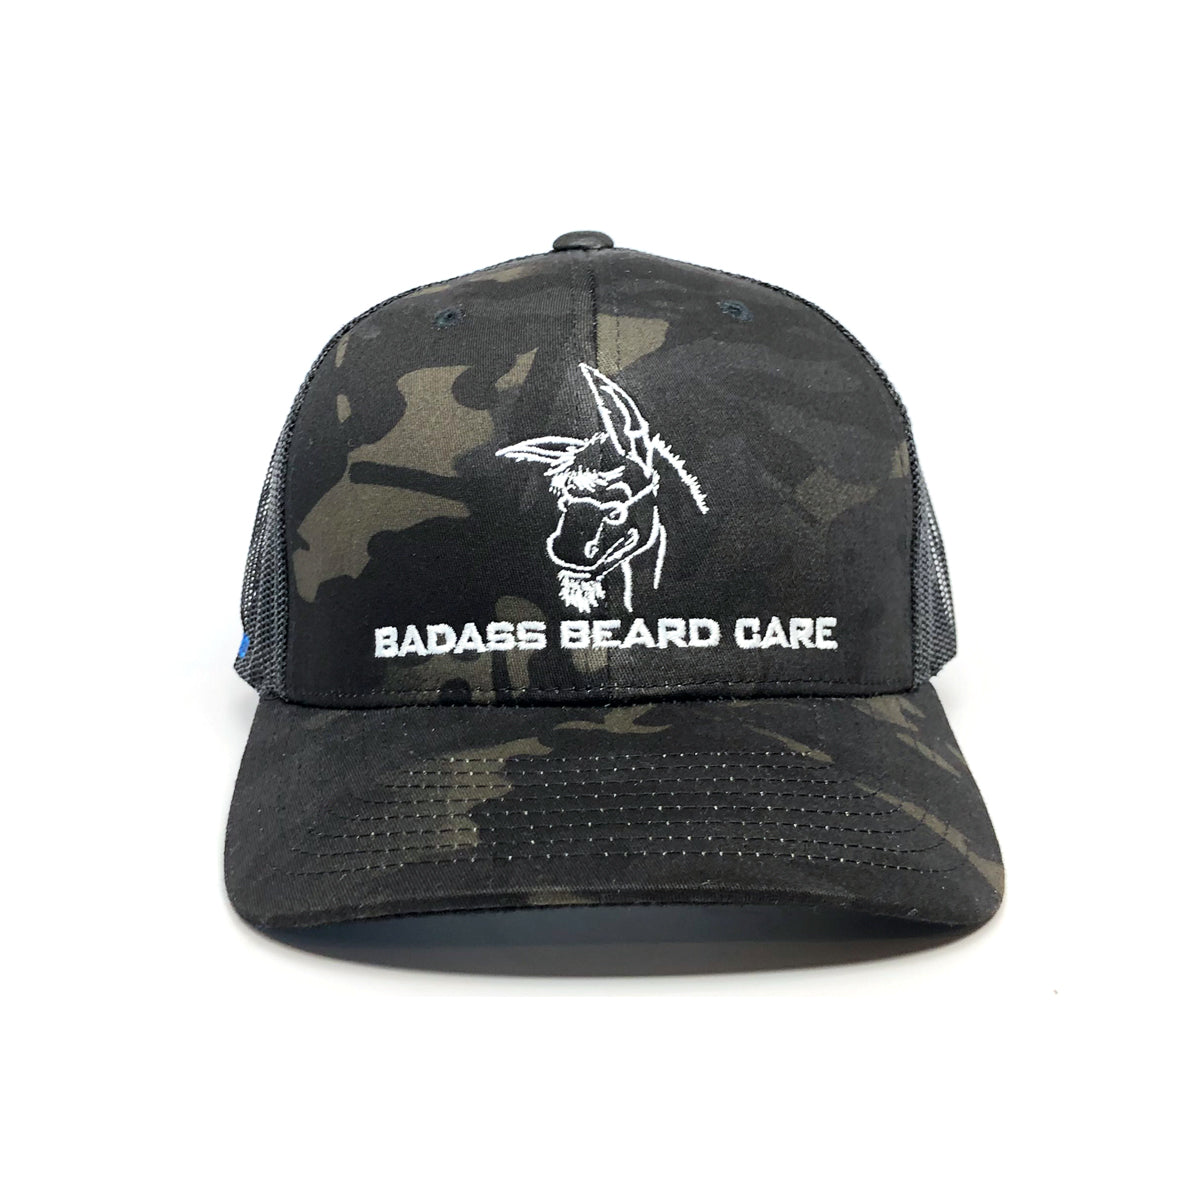 BABC Embroidered Trucker Hat Black Multi-Cam